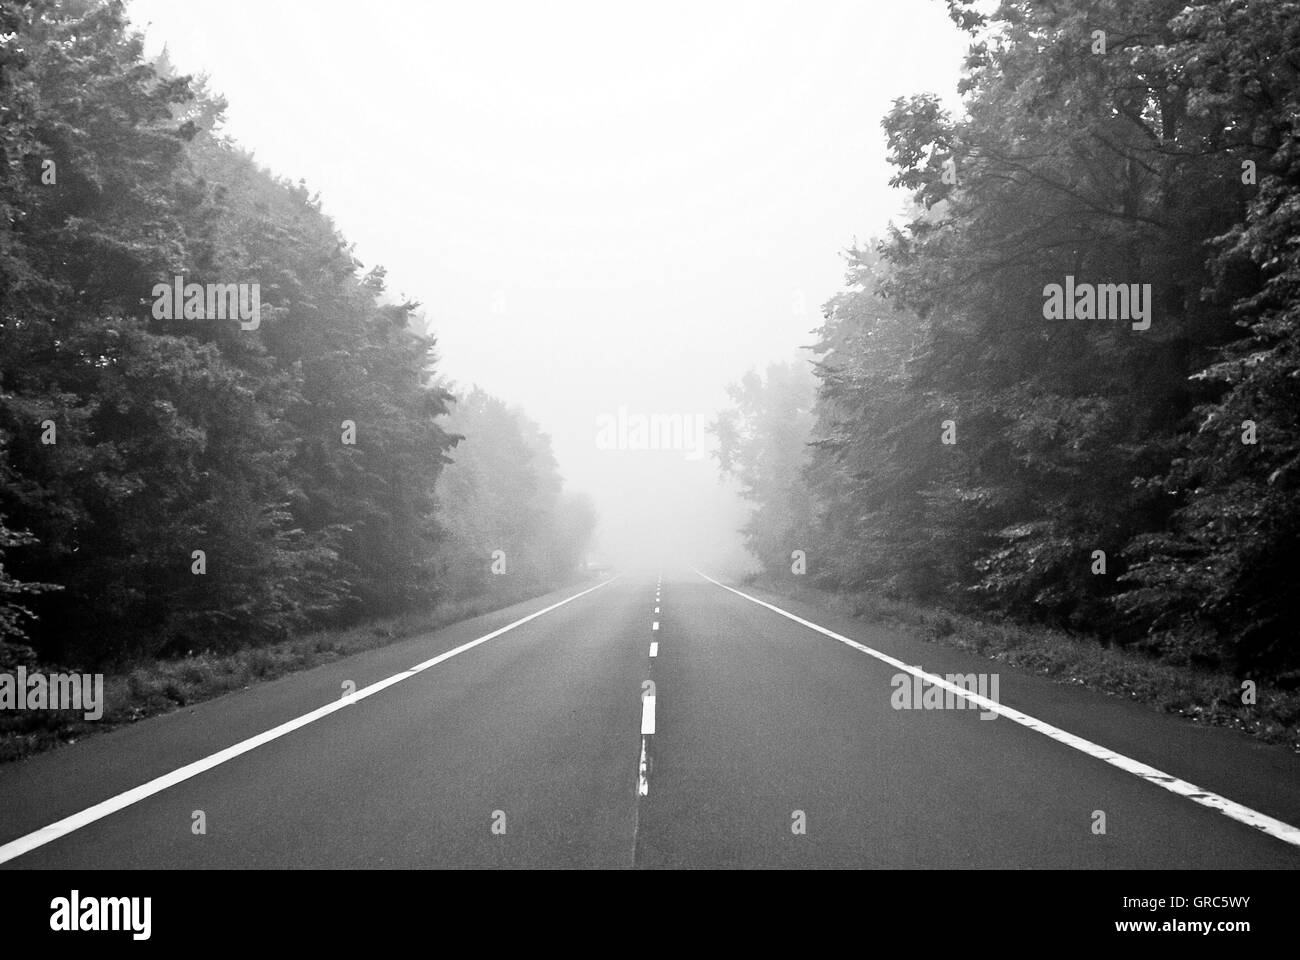 Forest, Trees, Fog, Black, Street, Stock Photo